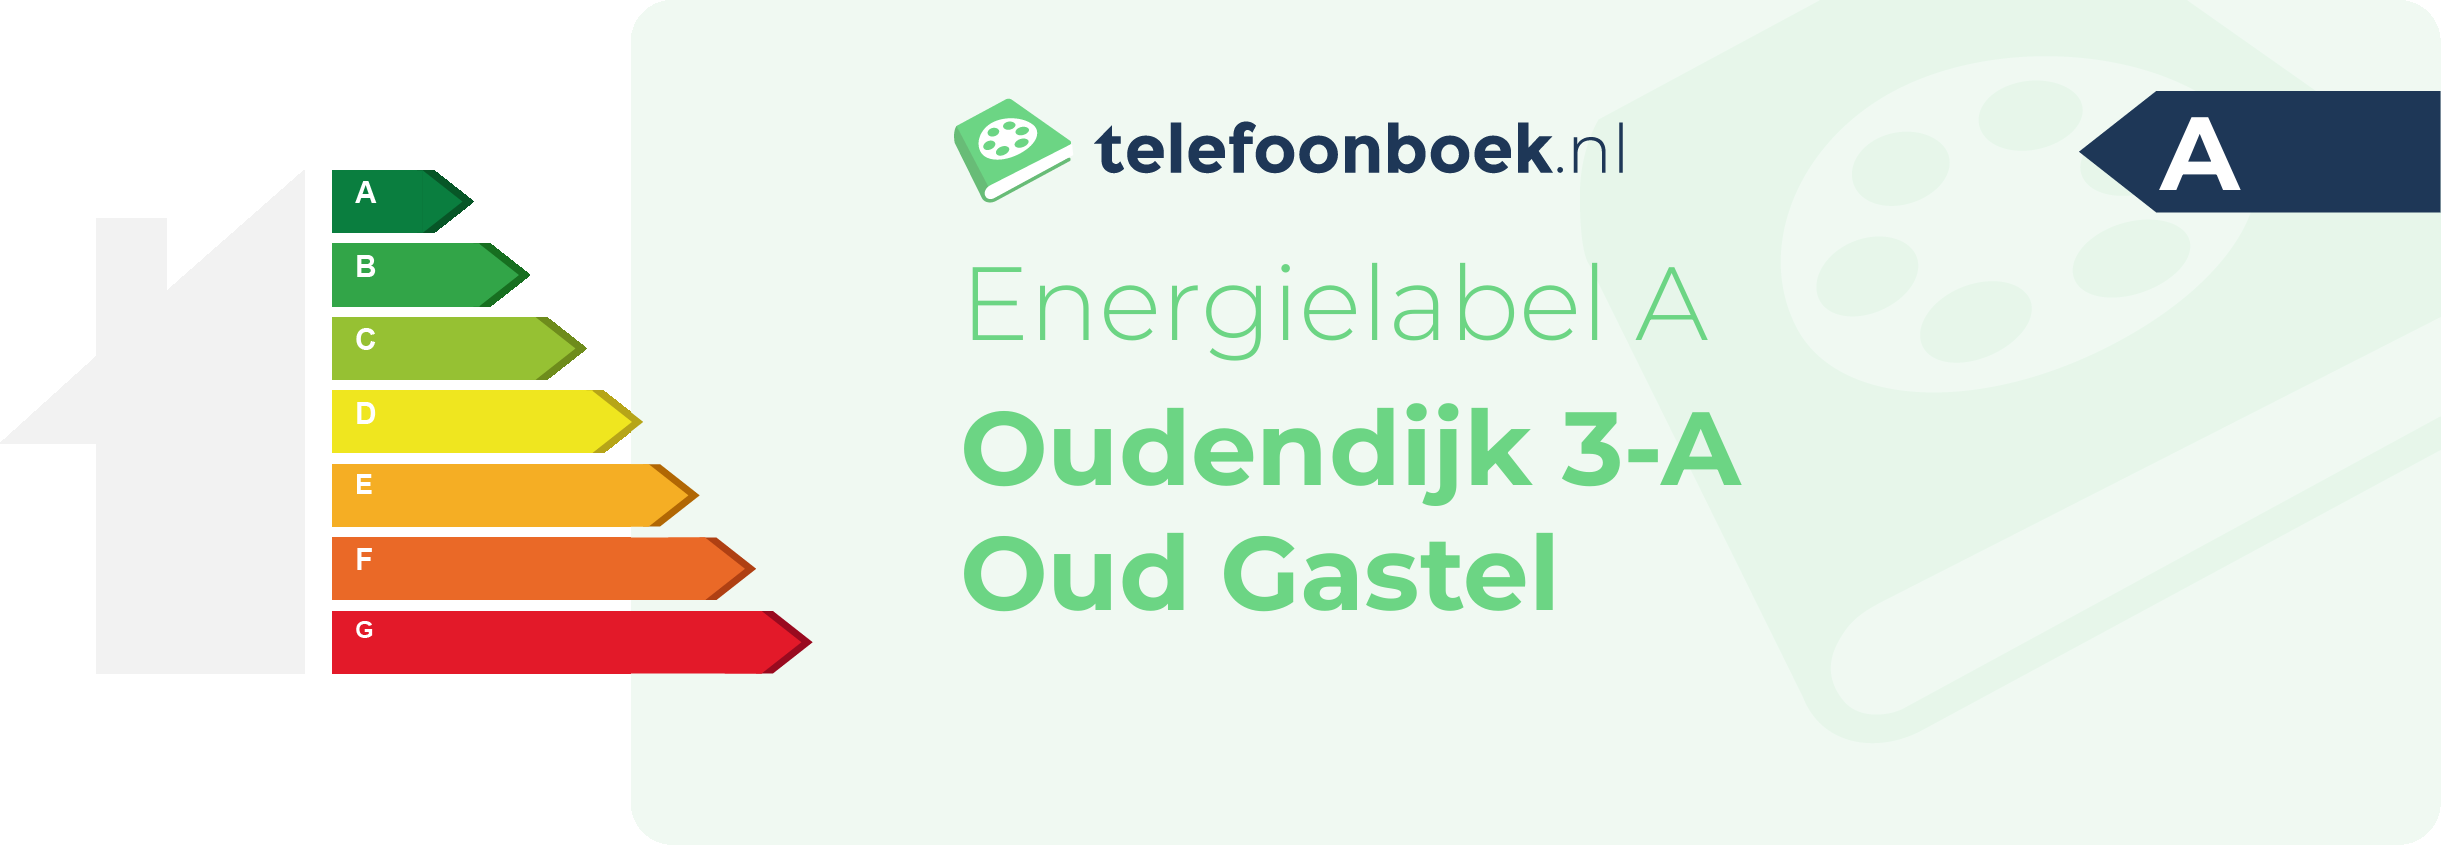 Energielabel Oudendijk 3-A Oud Gastel